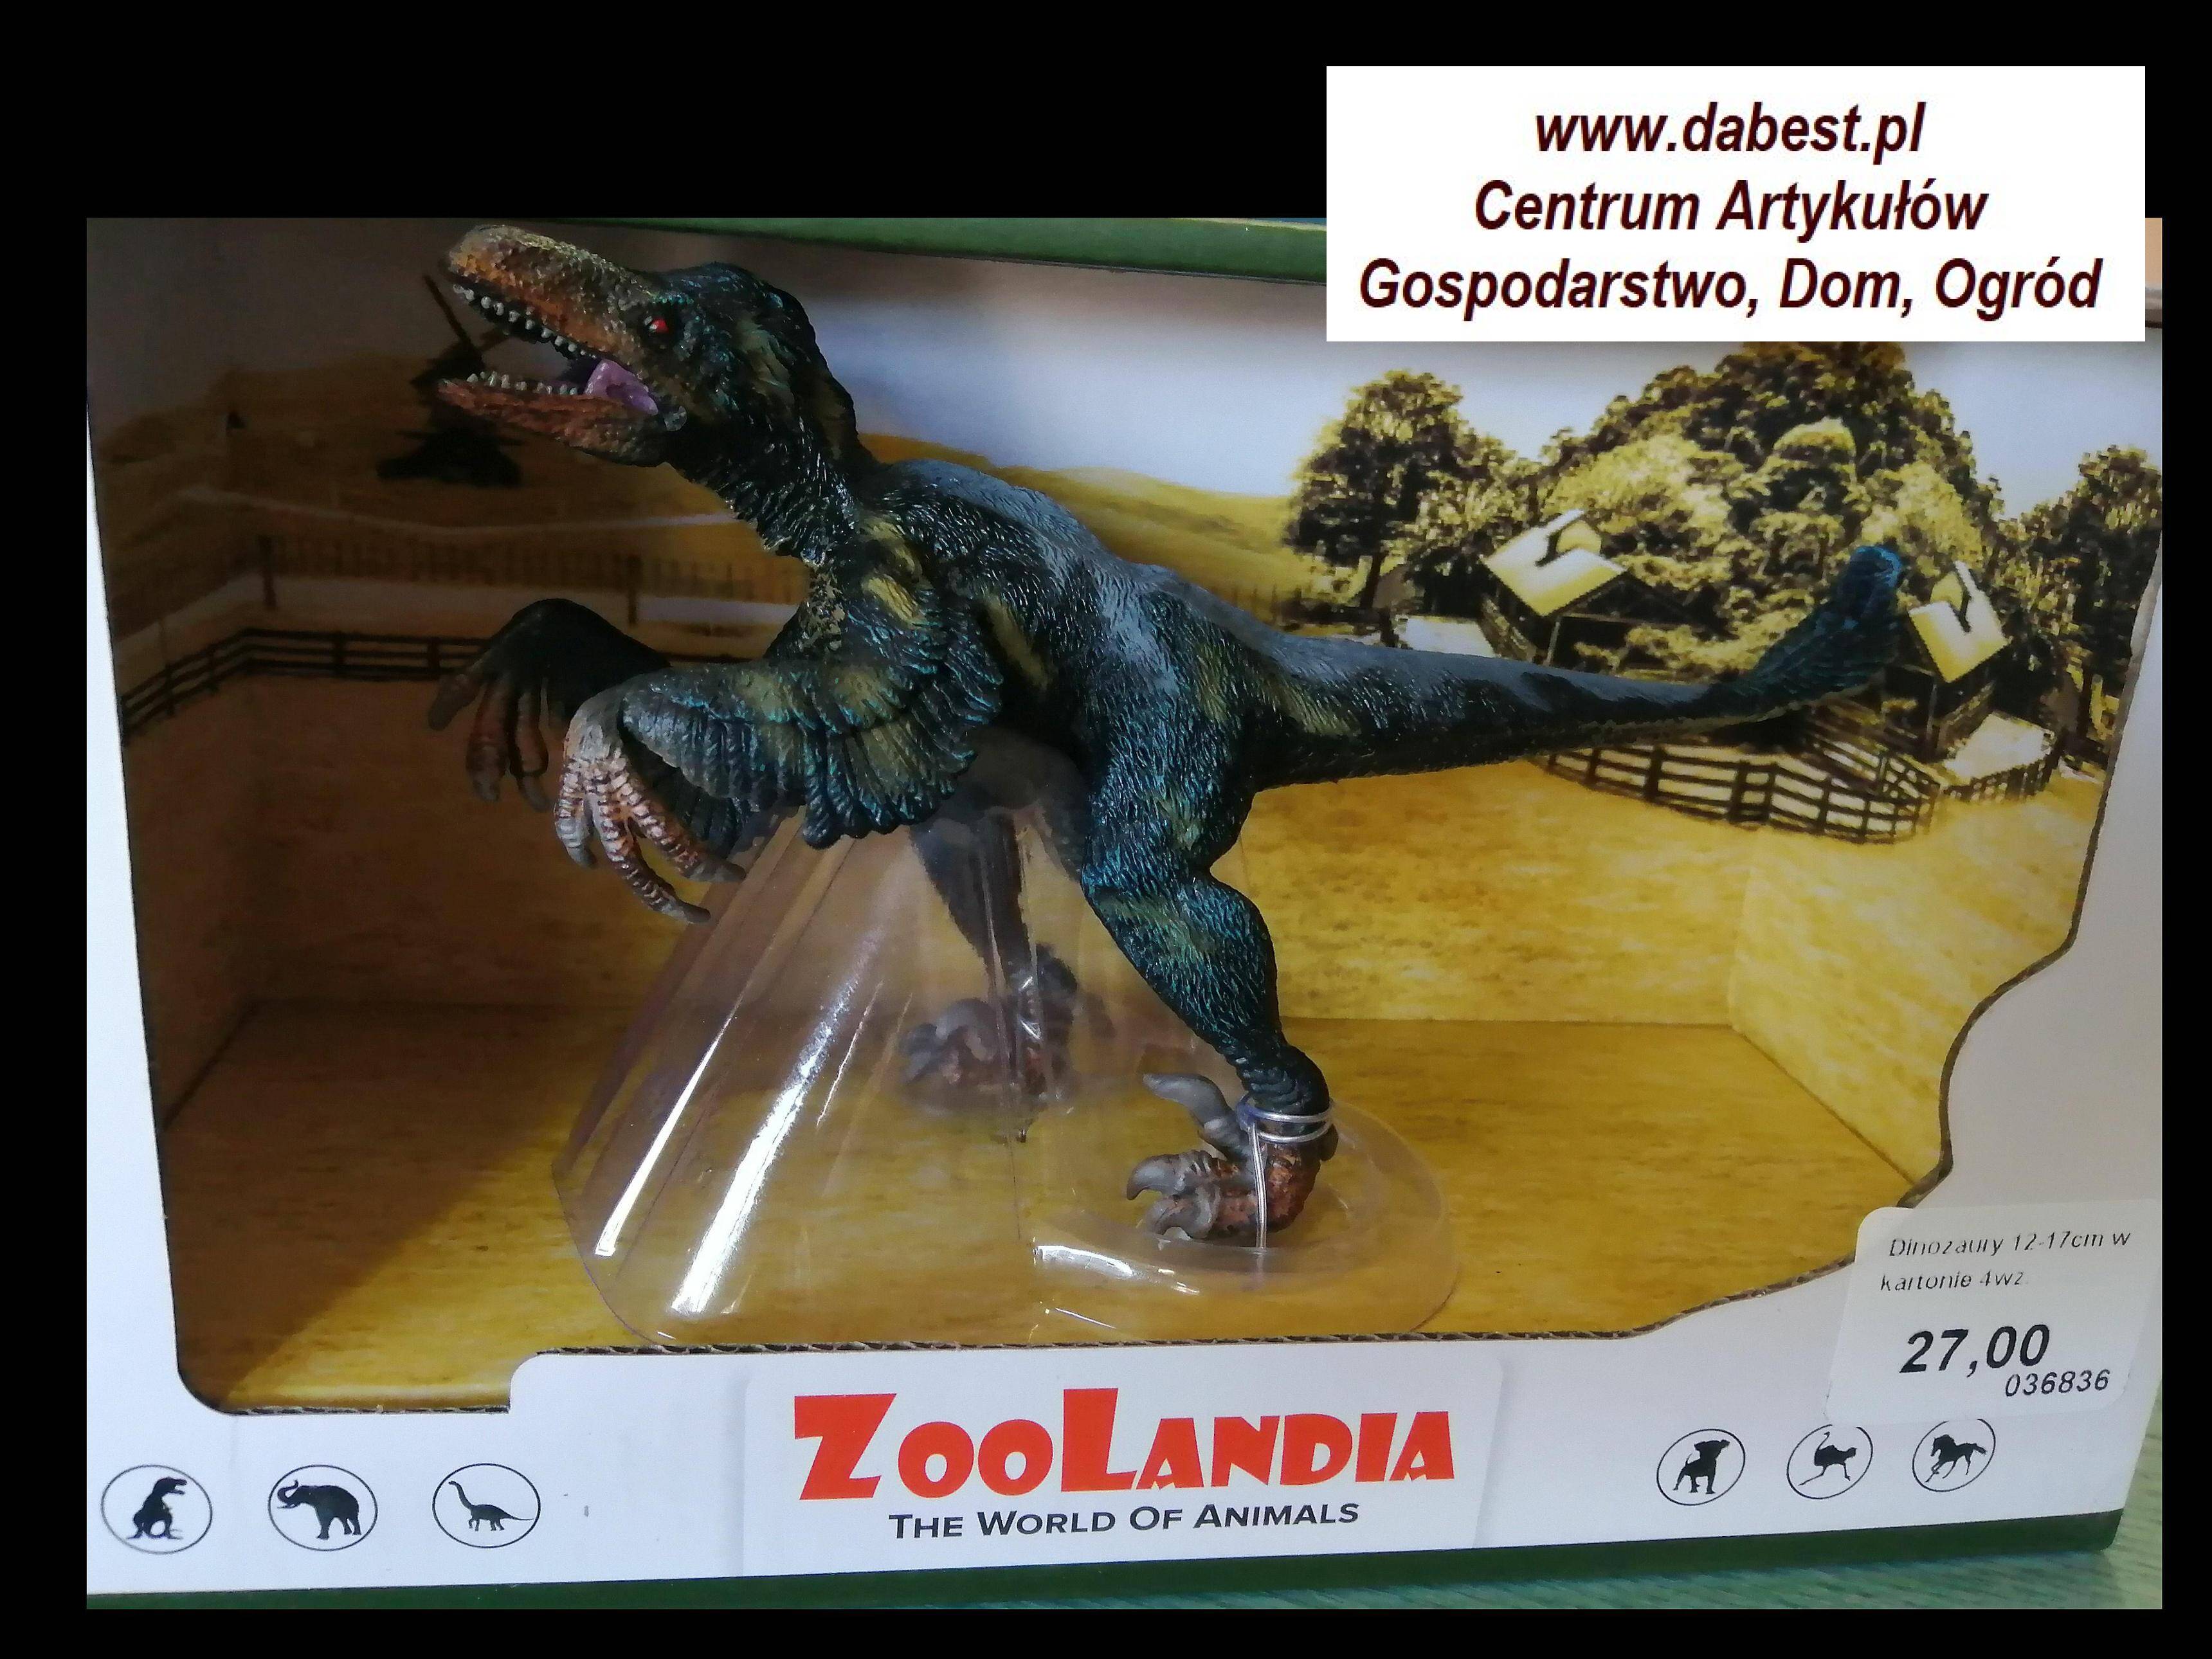 Dinozaur 12-17cm w kartonie